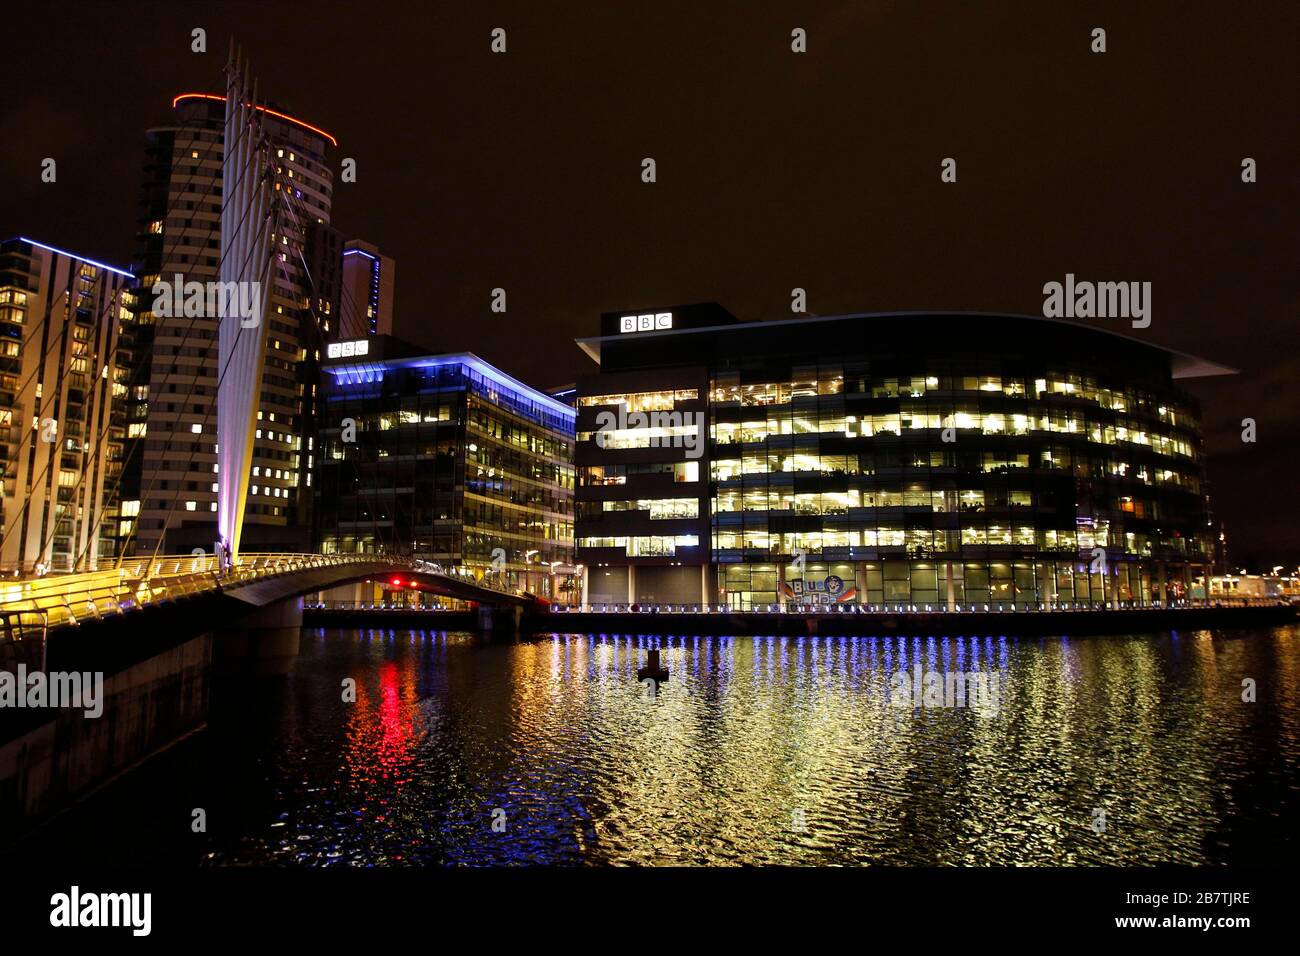 Edificios Mediacityuk BBC, vistos por la noche, en Salford Quays, cerca de Manchester, Inglaterra. - 14 de marzo de 2020 imagen de Andrew Higgins/Thousand Word Media Foto de stock